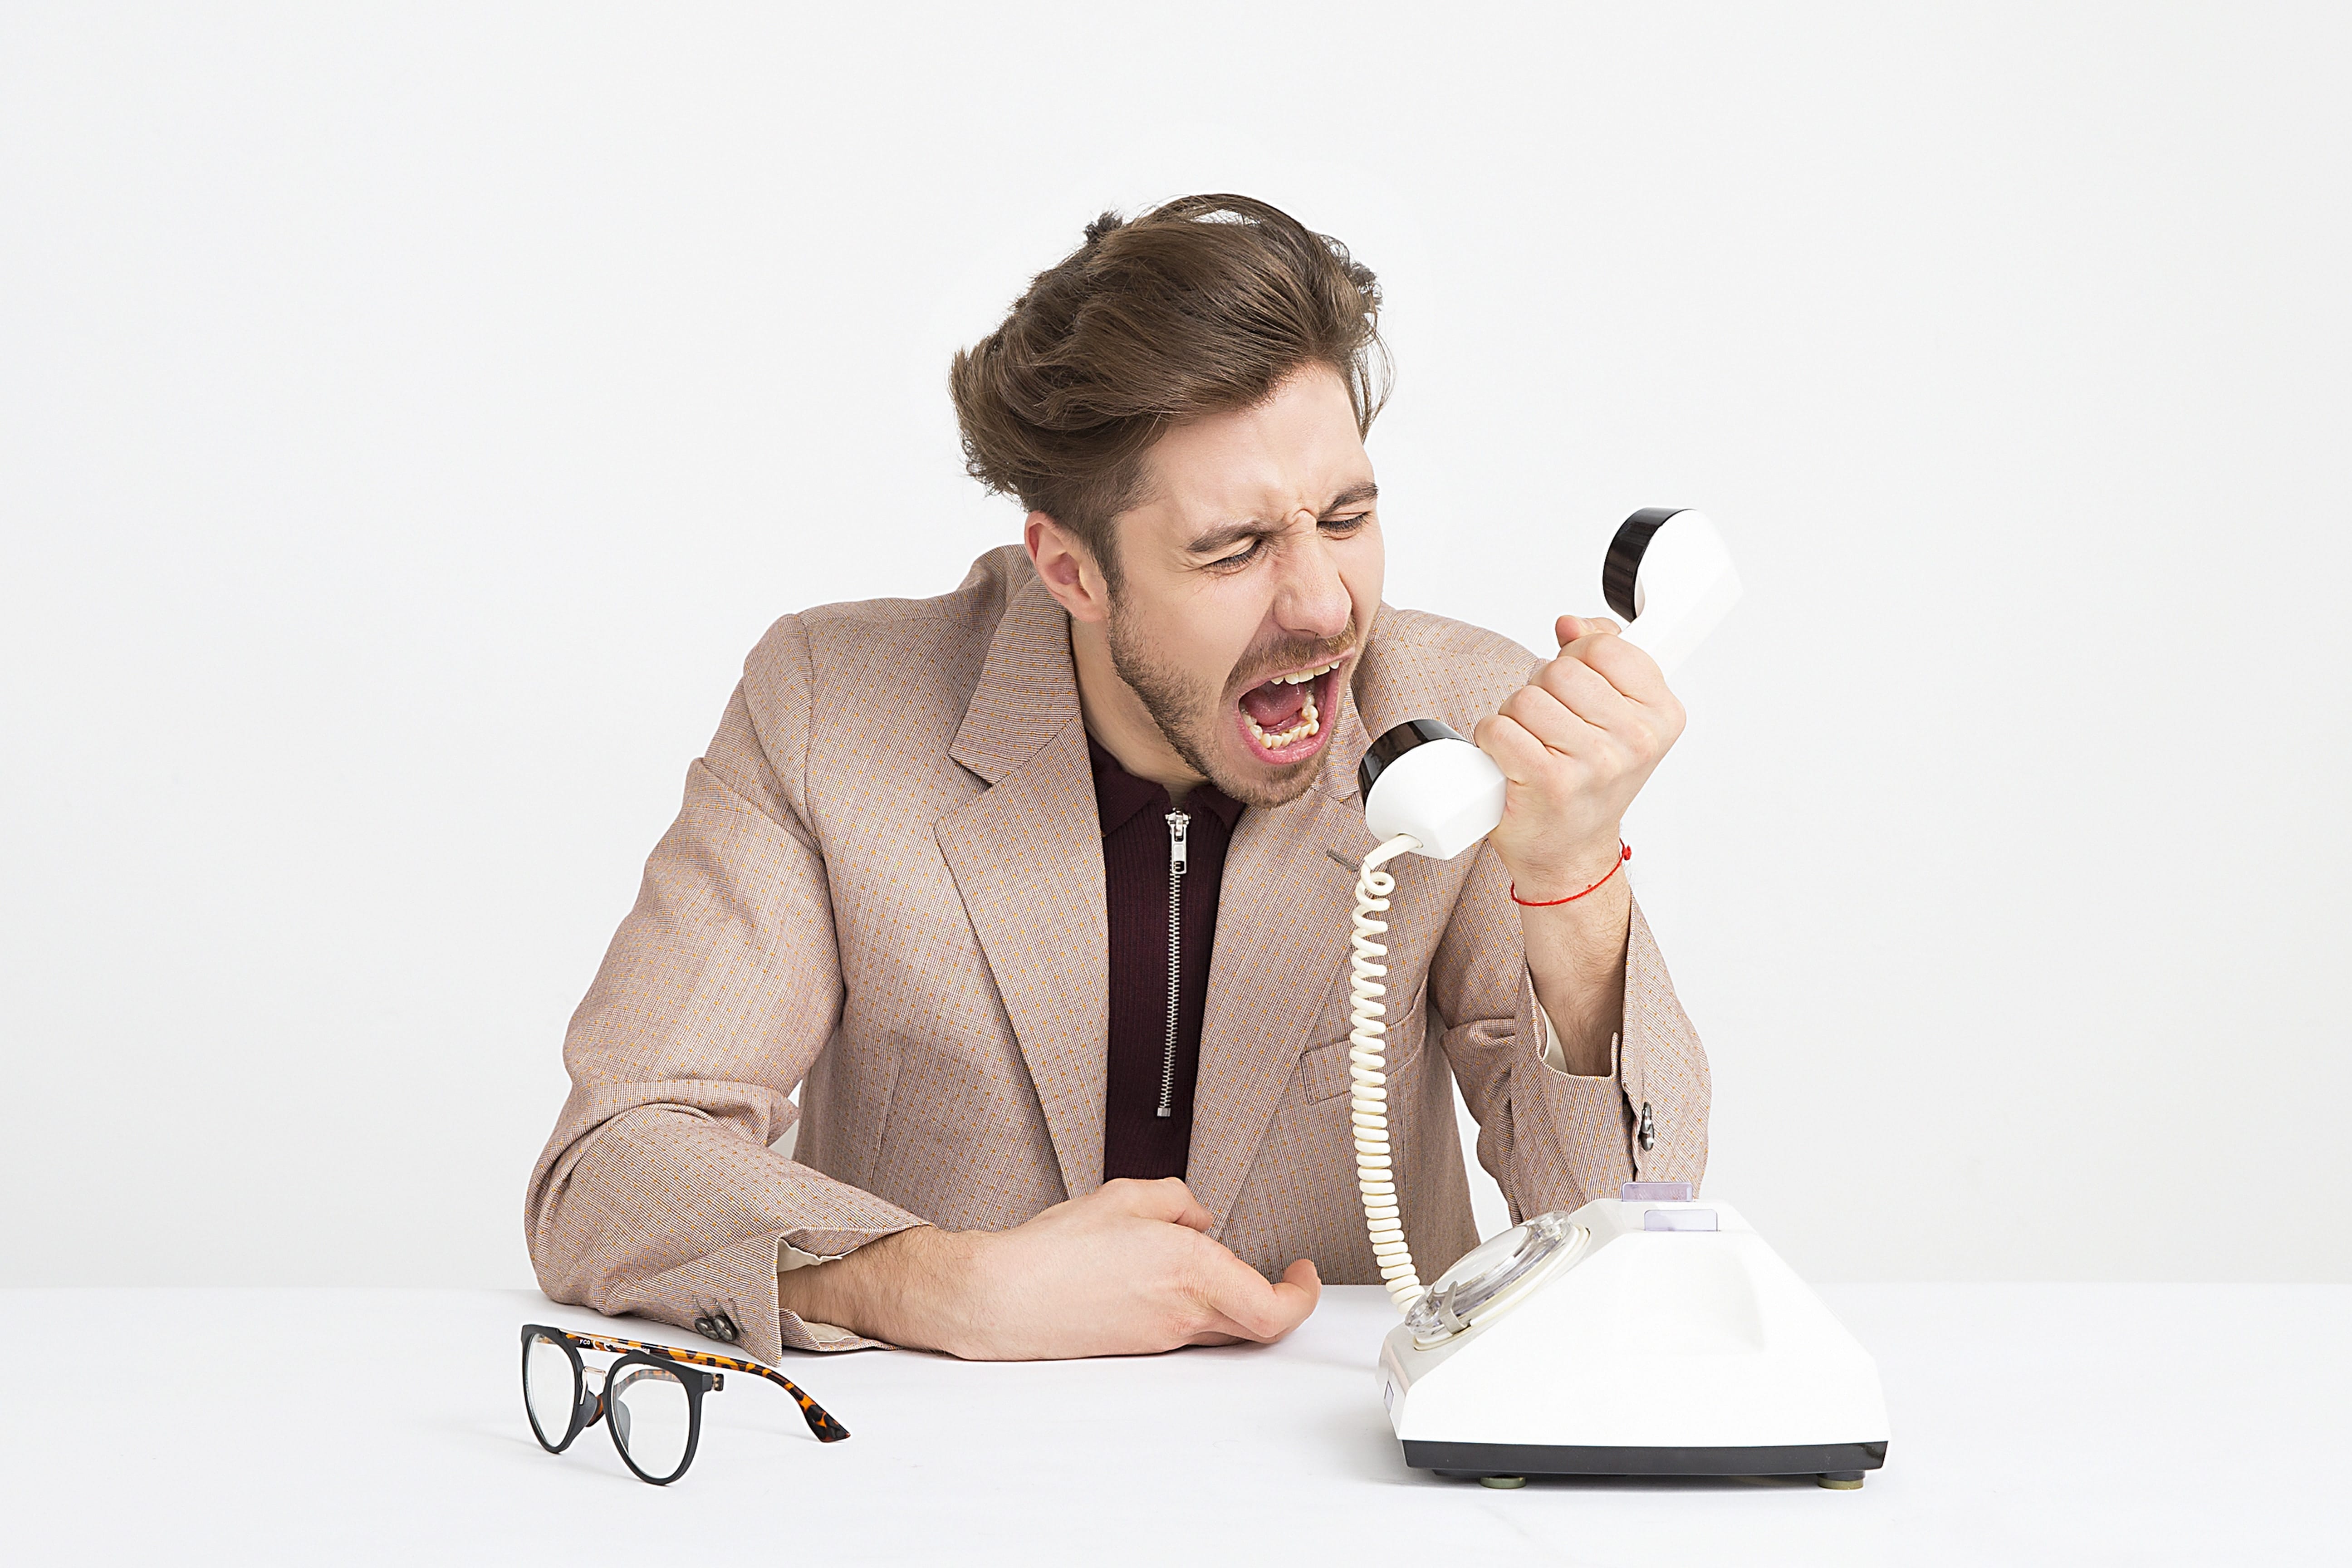 Man screaming into telephone; image by Icons8 Team, via Unsplash.com.